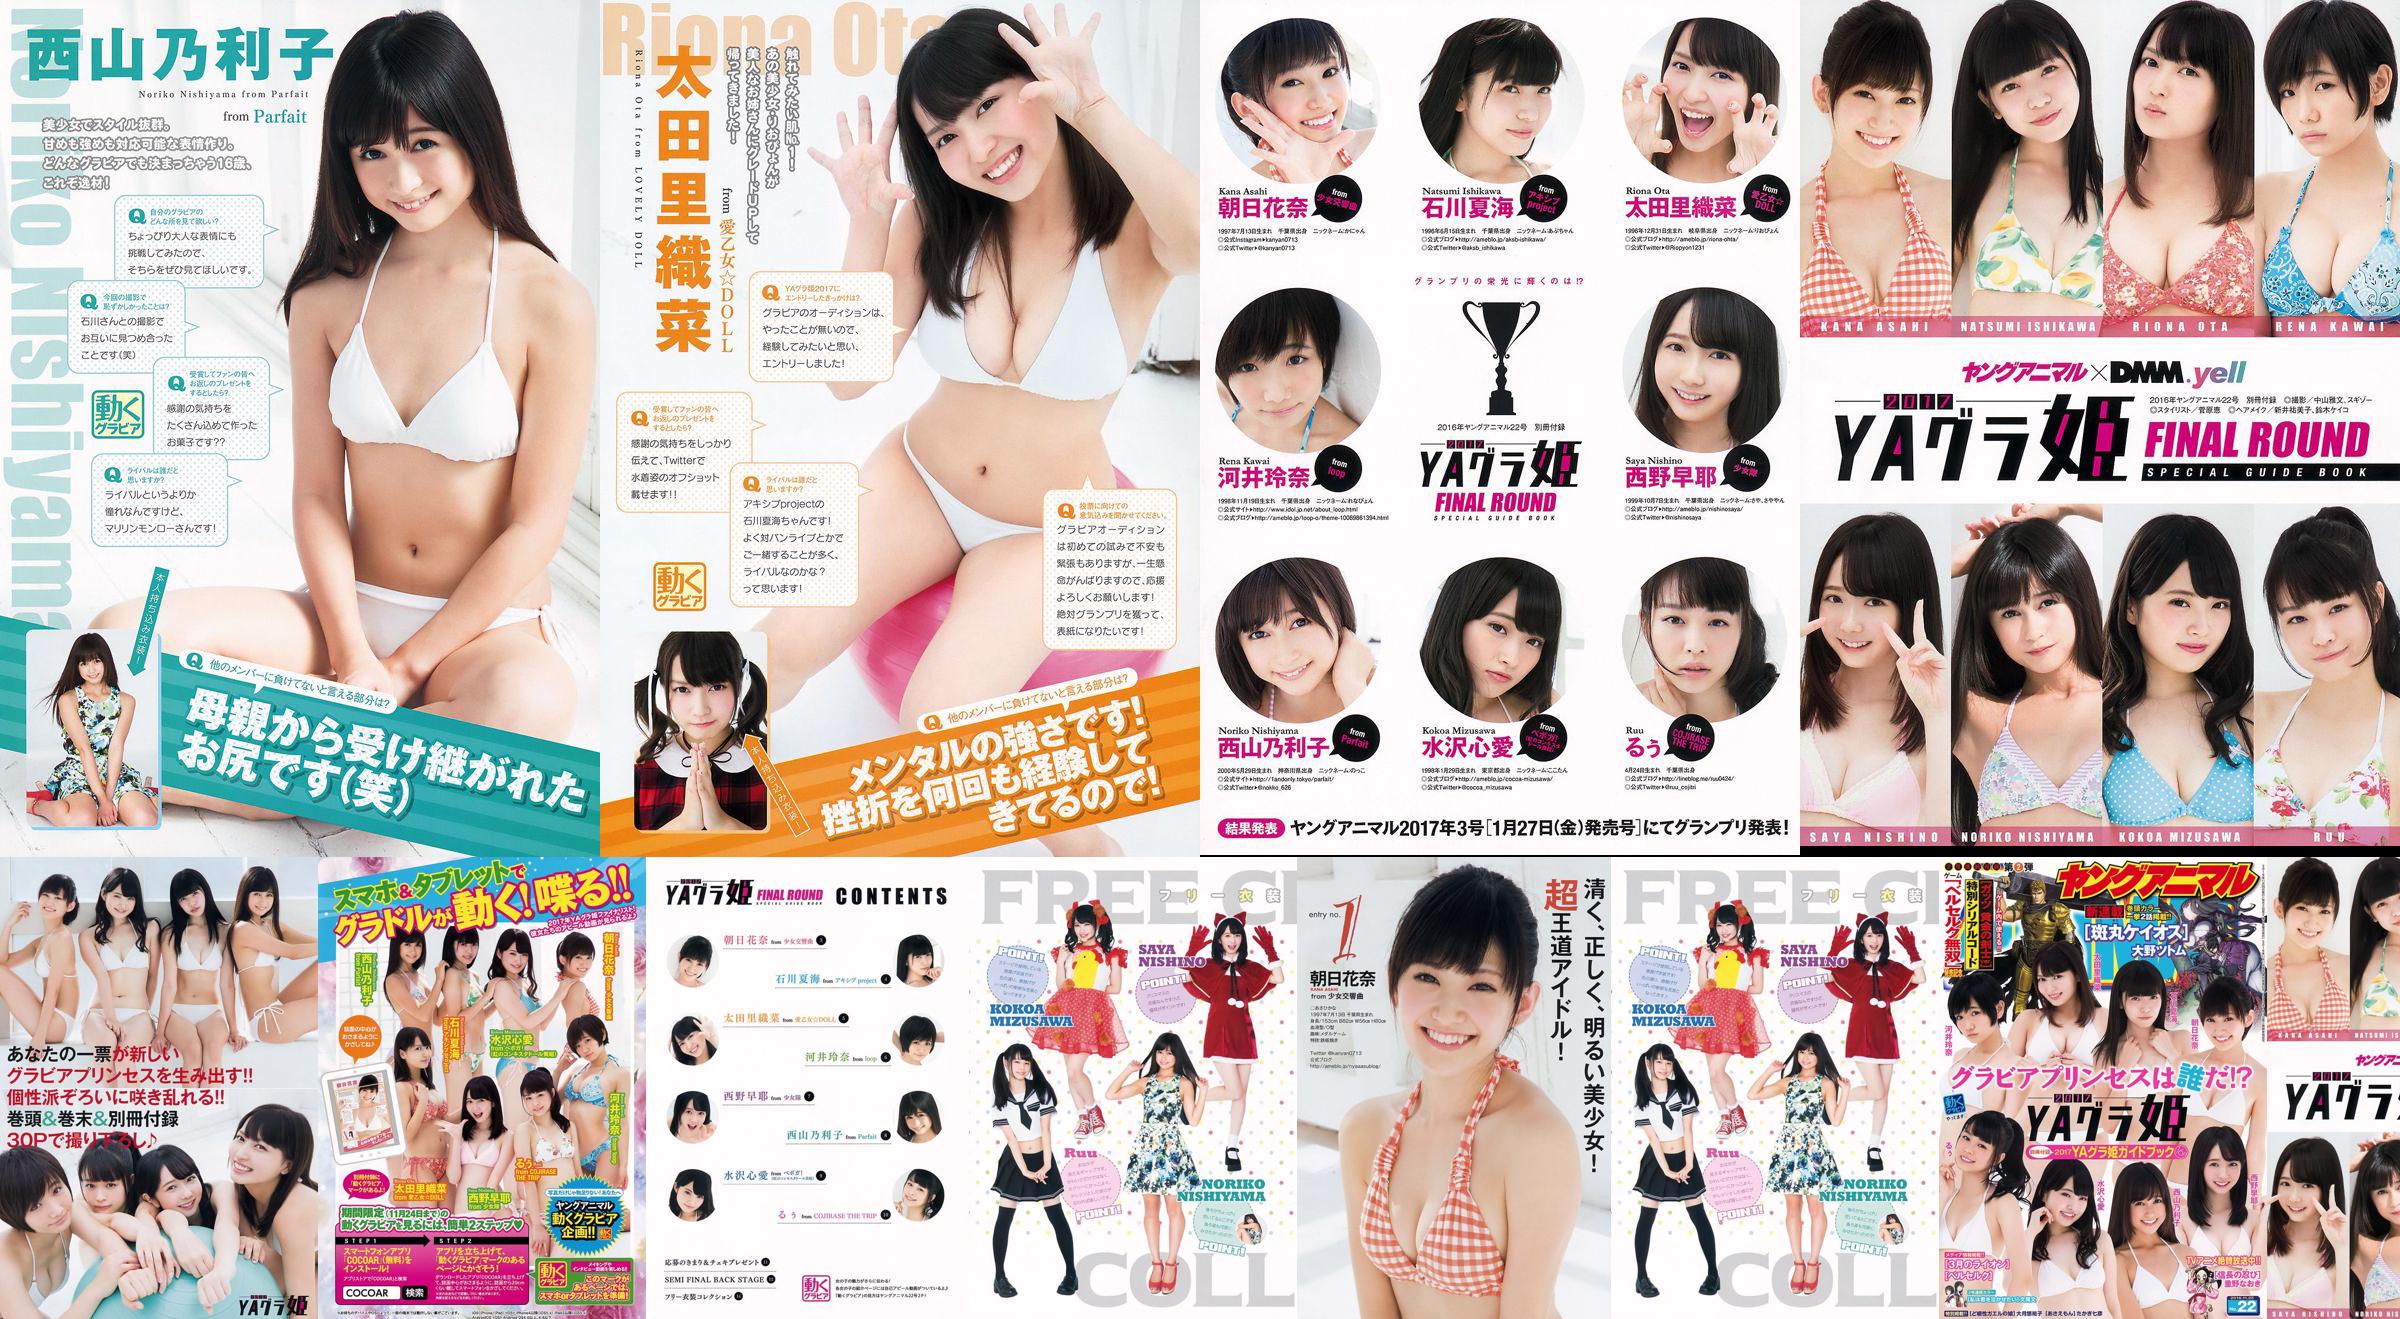 Mizusawa Beloved, Nishiyama Noriko, Nishino Haya, Kawai Reina, Ota Rina, Ishikawa Natsumi, Asahi Hana [น้องสัตว์] นิตยสารภาพถ่ายฉบับที่ 22 ประจำปี 2559 No.669d55 หน้า 2